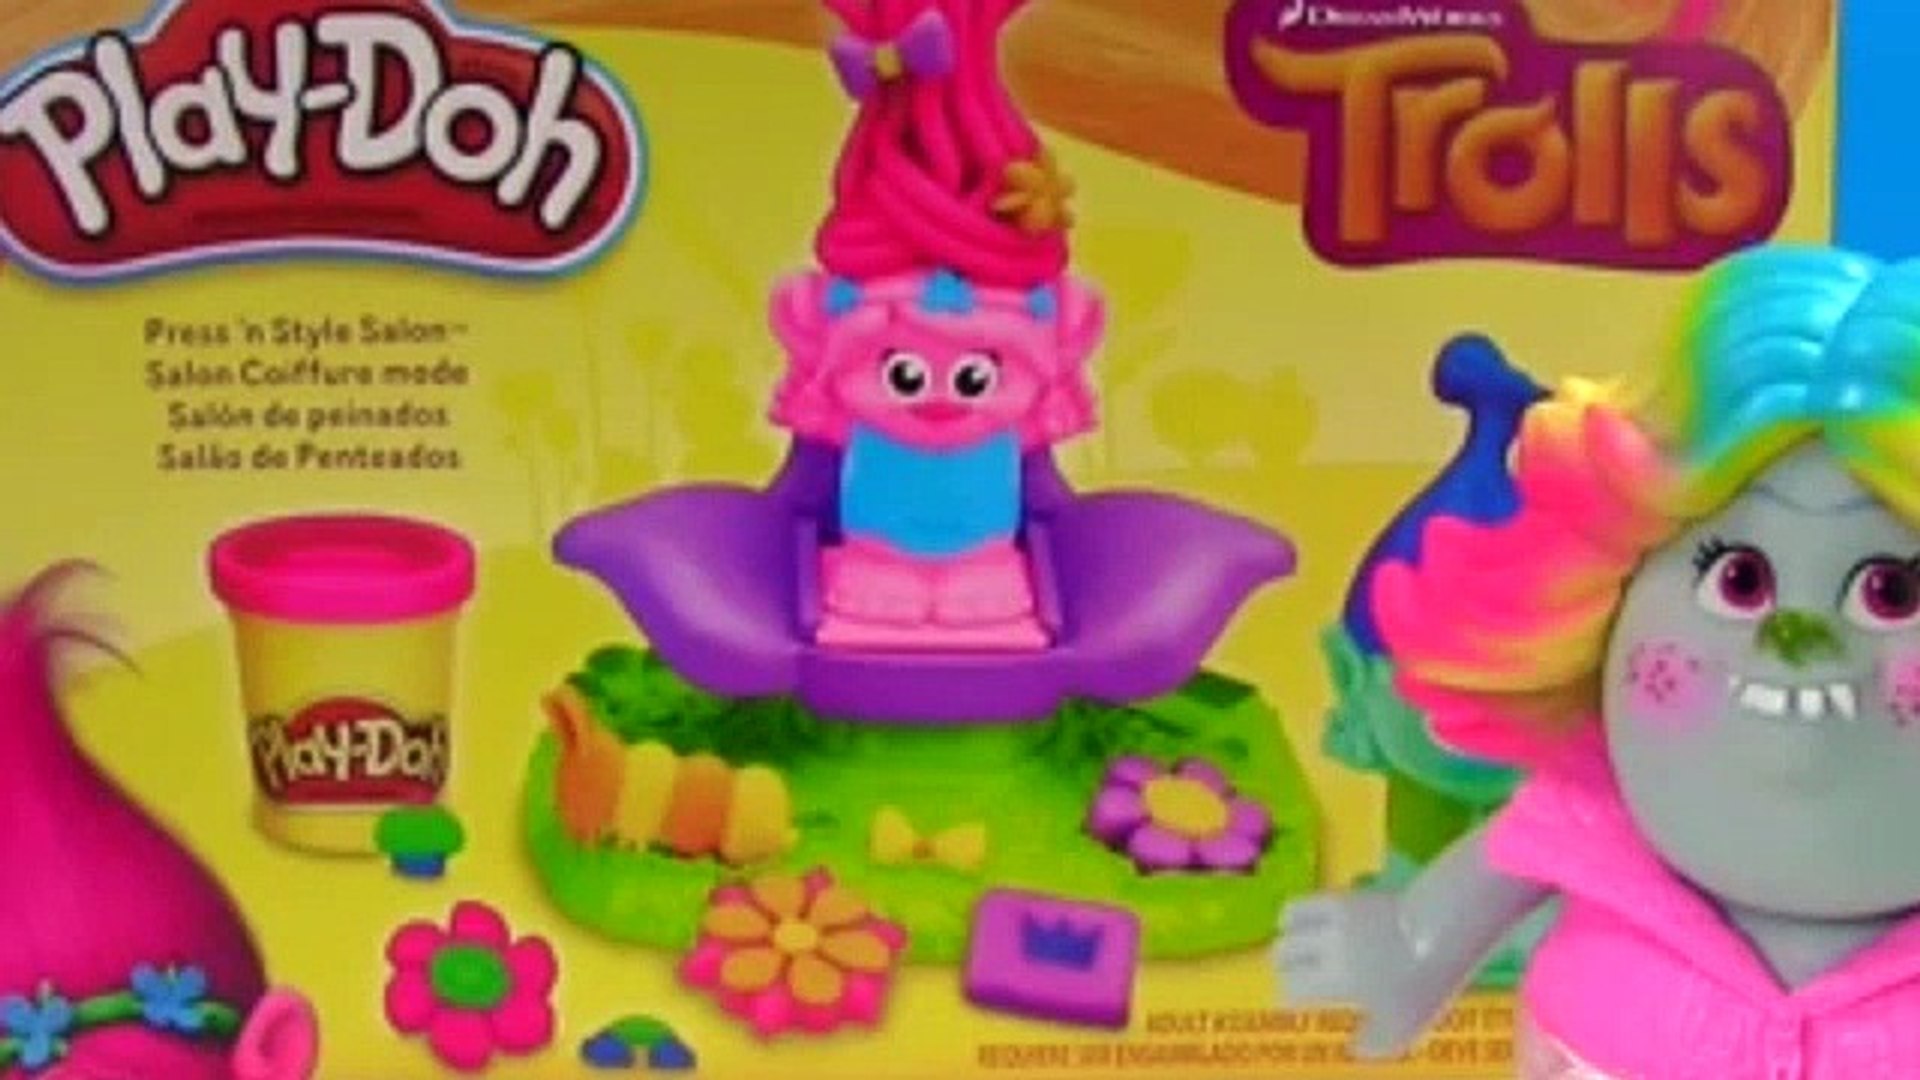 Play-Doh Trolls Press N Style Salon